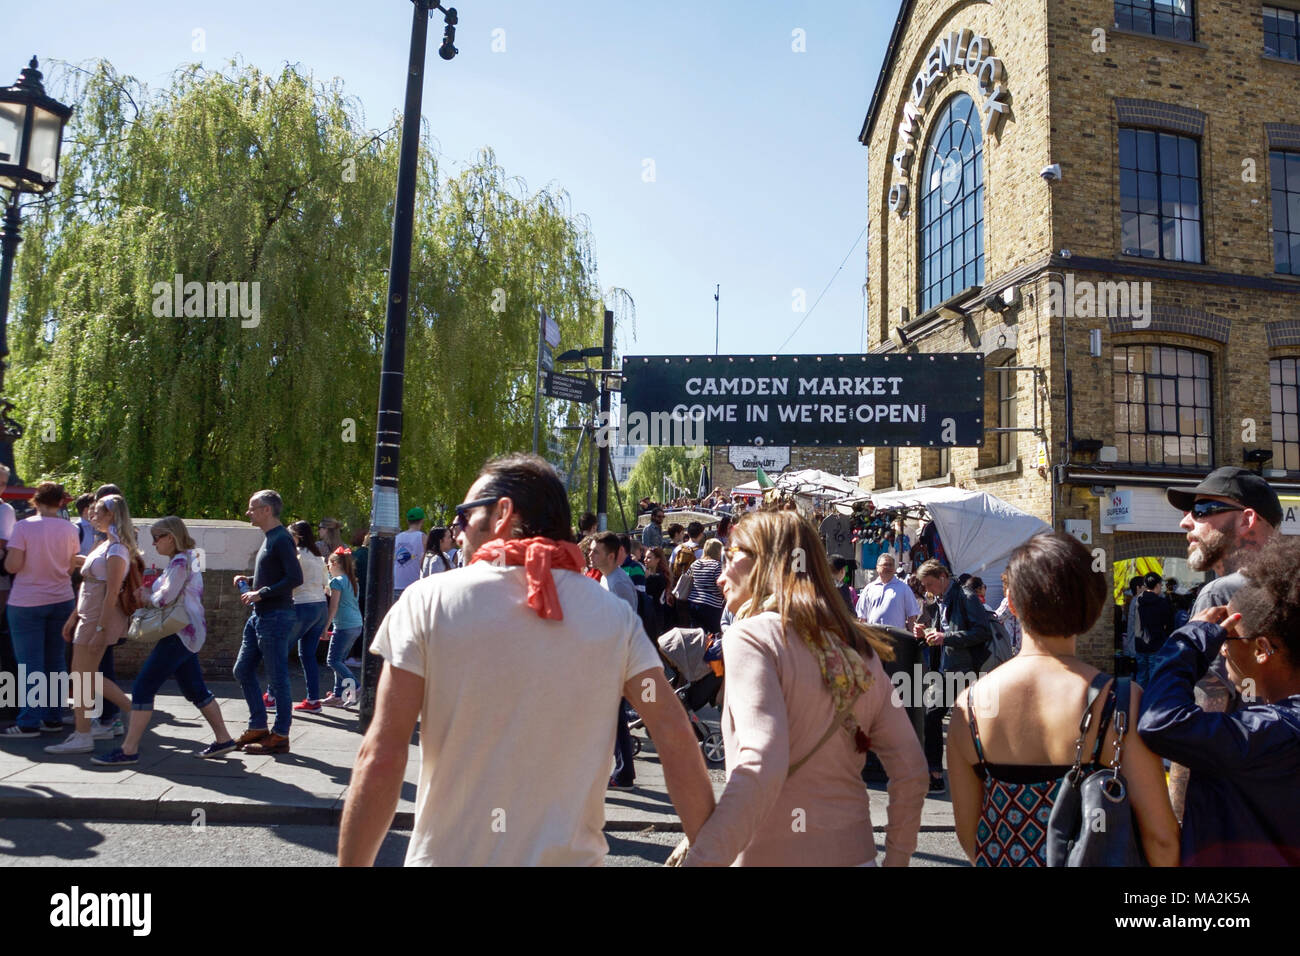 Camden Lock Market, Camden London UK. Tourists visiting London Camden Market. London tourism. Stock Photo